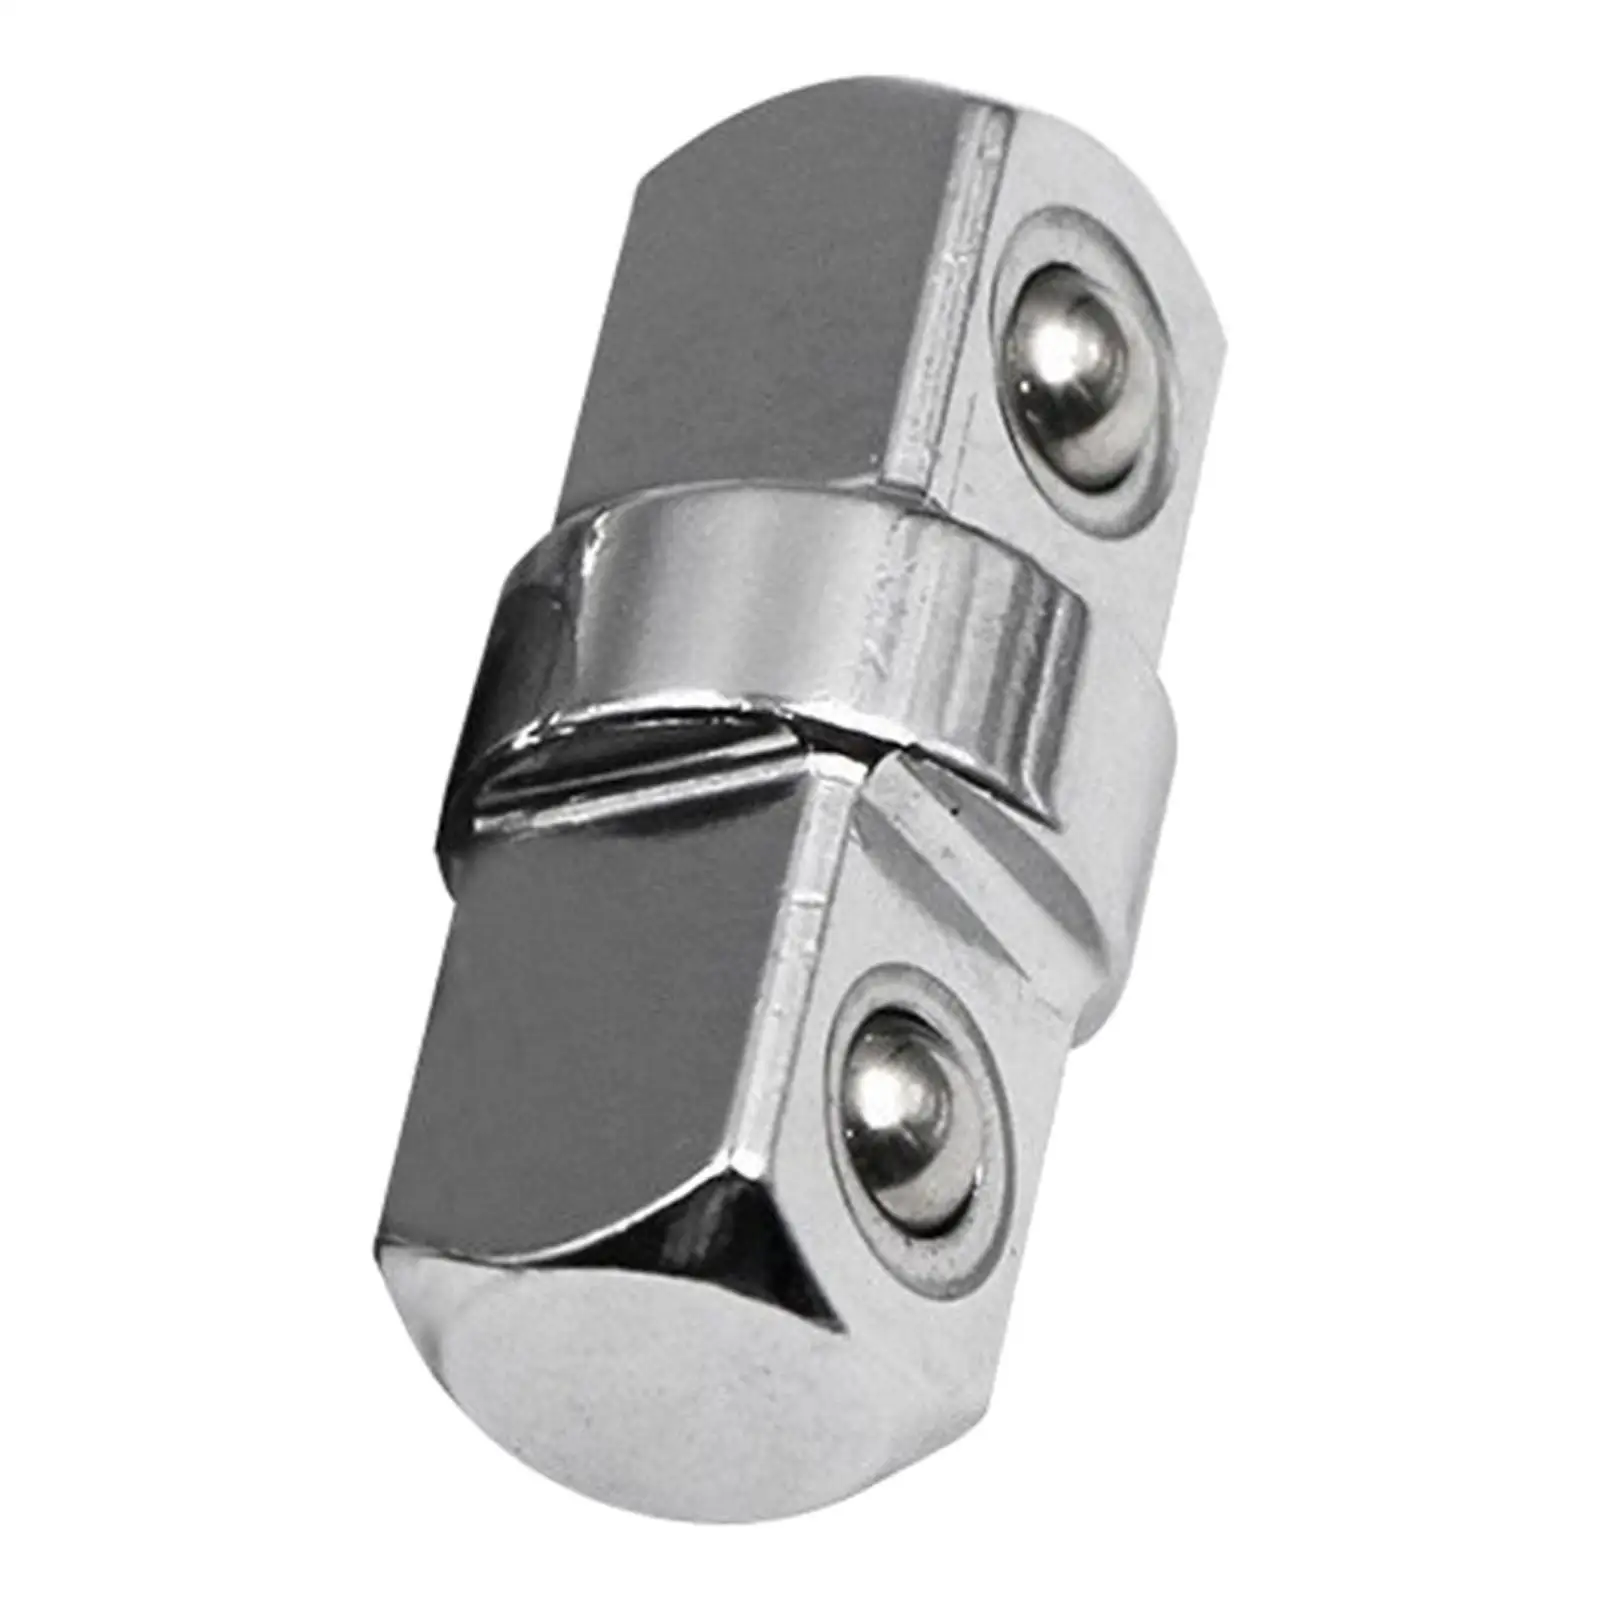 

3/8 inch Joint Socket Adapter Repairs Double Head Socket Tools Steel Hexagonal Connector Sleeve Reducer Adapter Converter